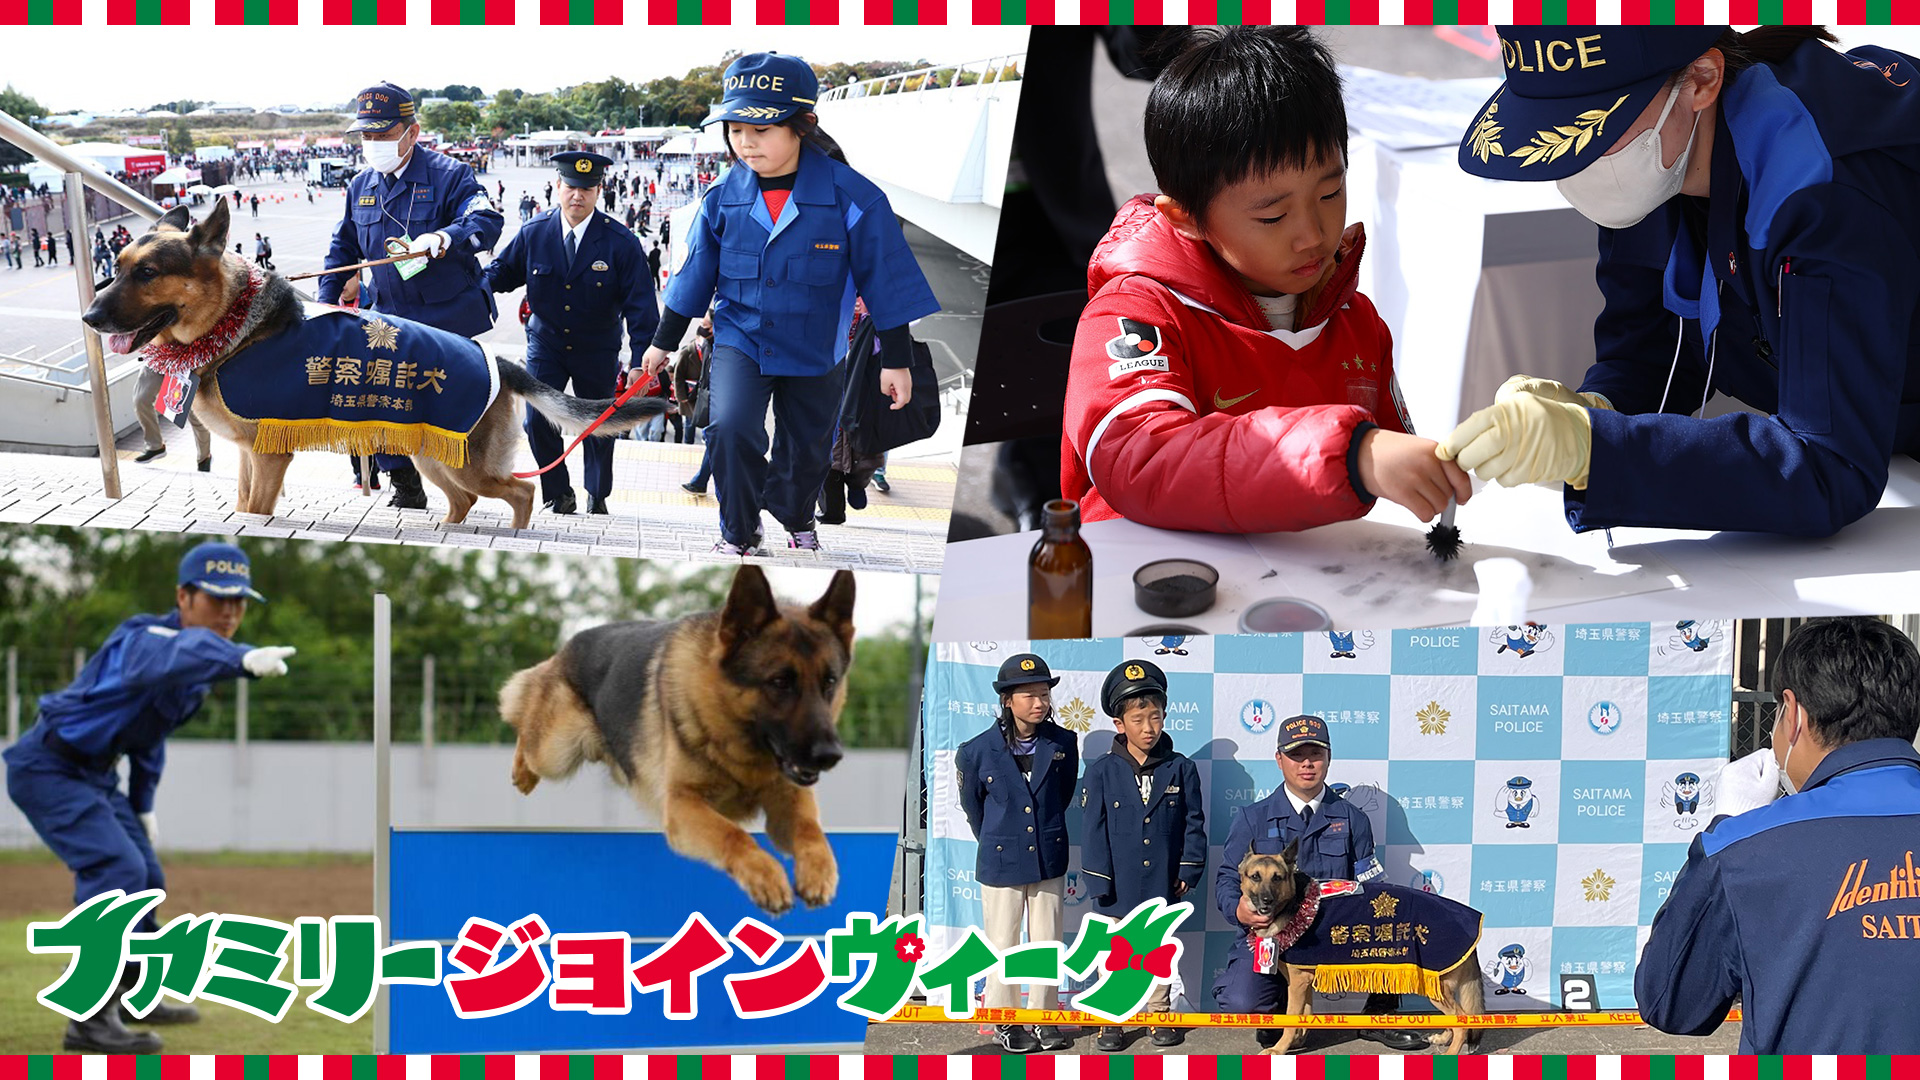 5/6 (Mon., Holiday) Yokohama F. Marinos Marinos match Join the family! Saitama Prefectural Police Work Experience